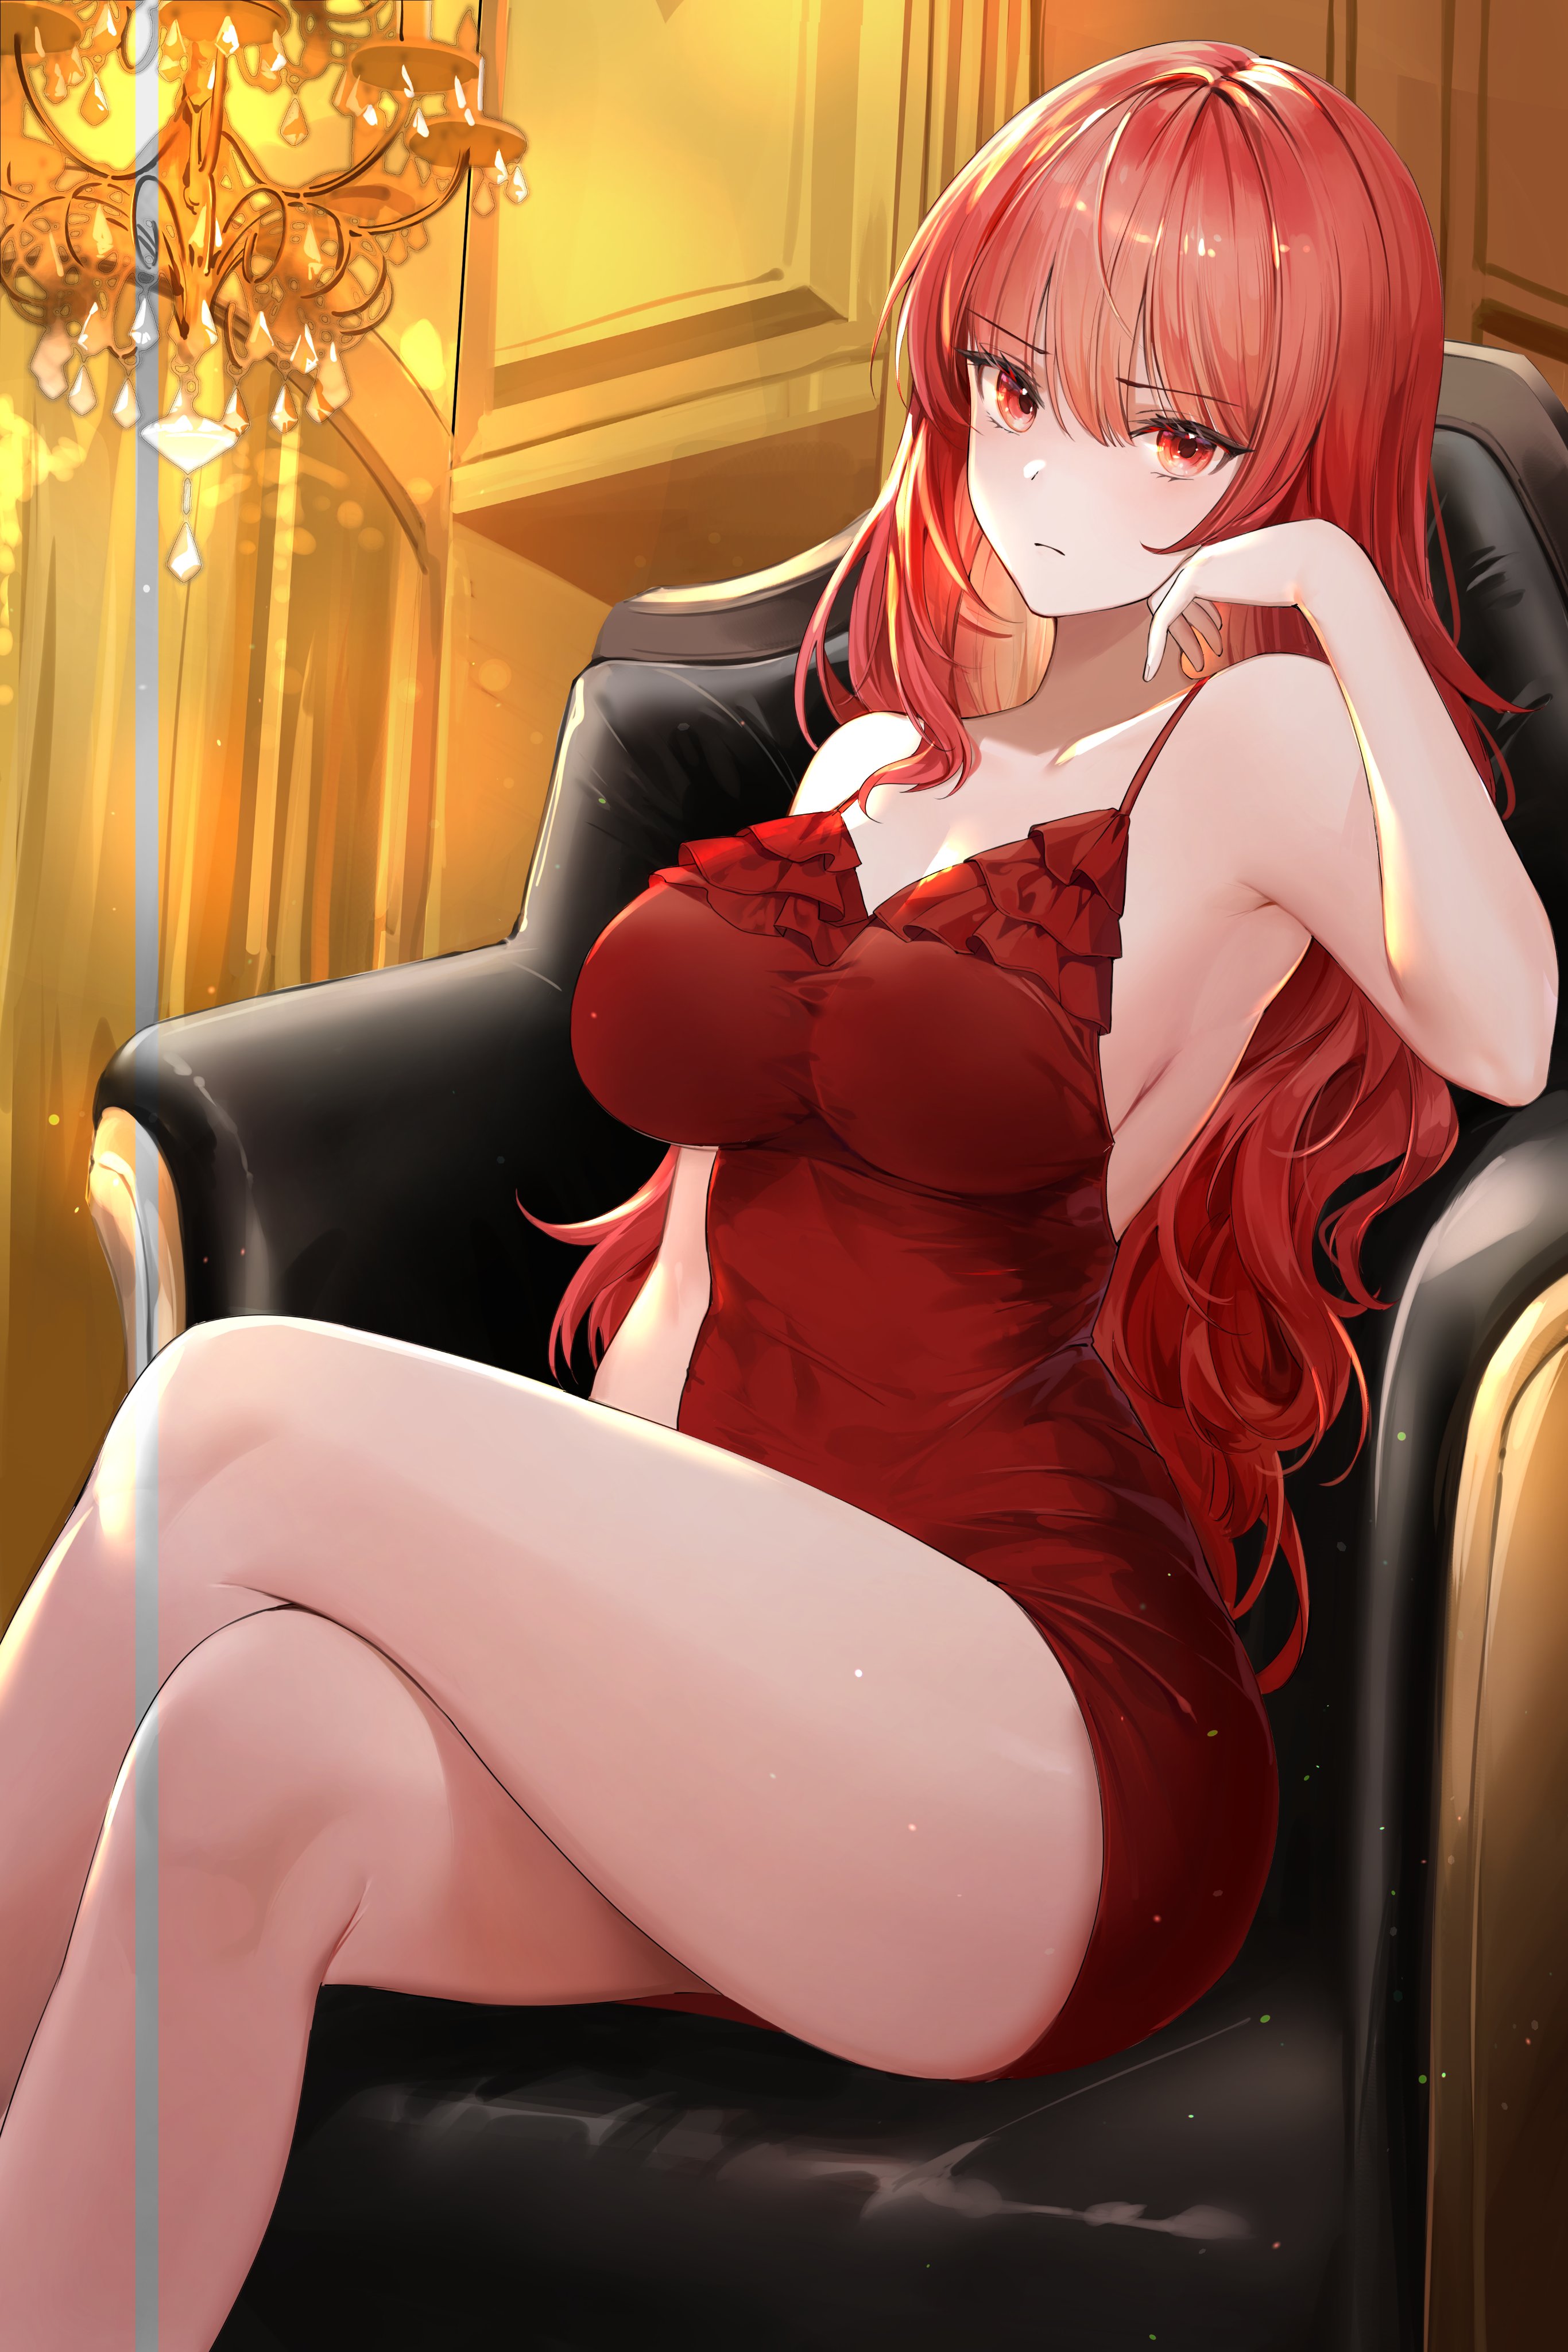 Anime Anime Girls Redhead Red Eyes Looking At Viewer Red Dress Dress Sitting Legs Crossed Artwork Li 2731x4096